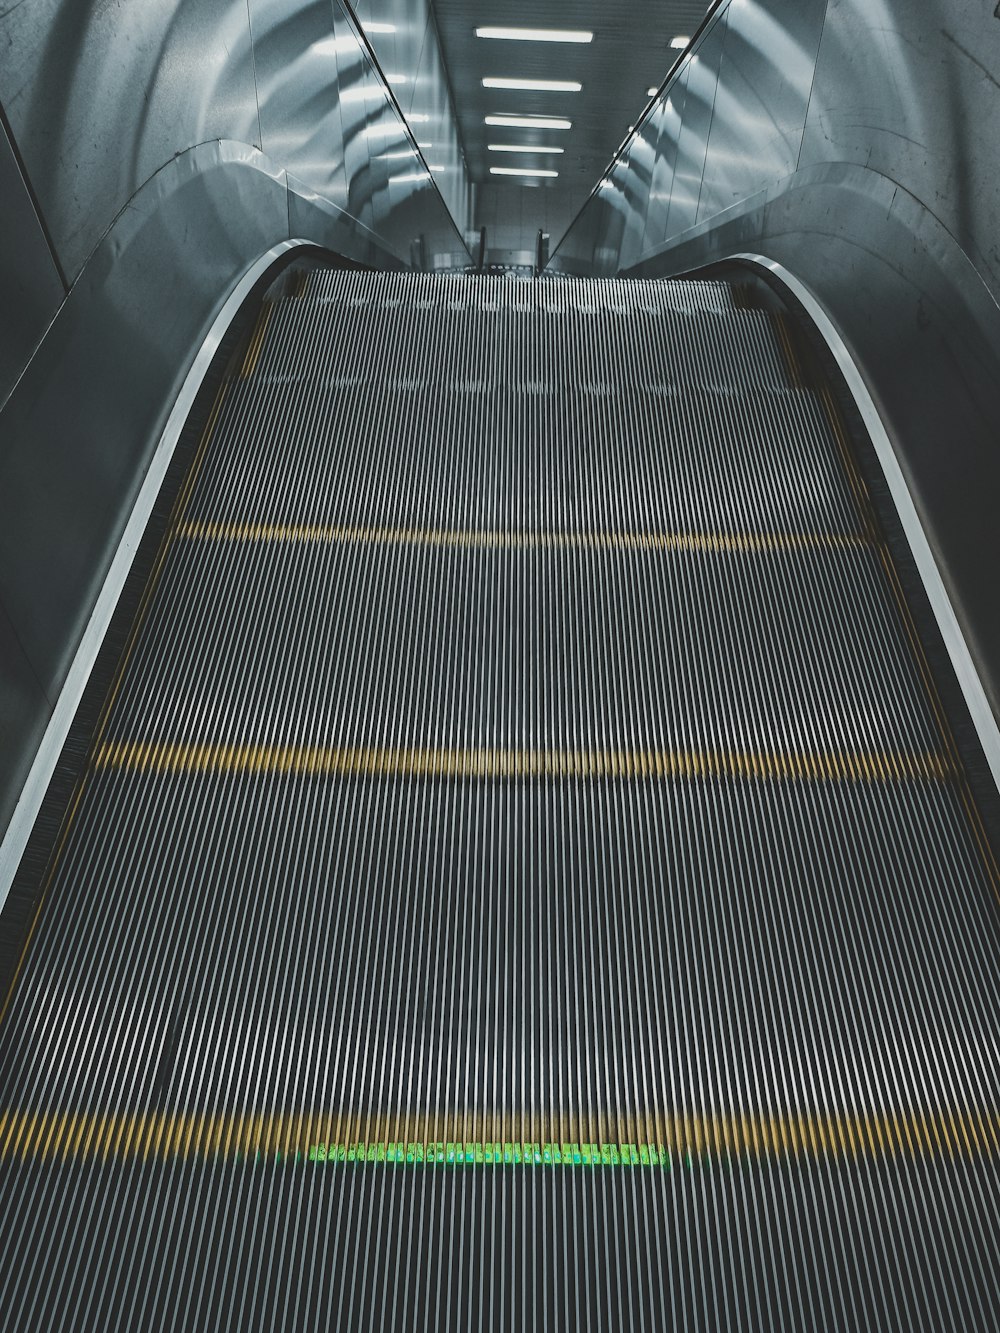 gray escalator with no people